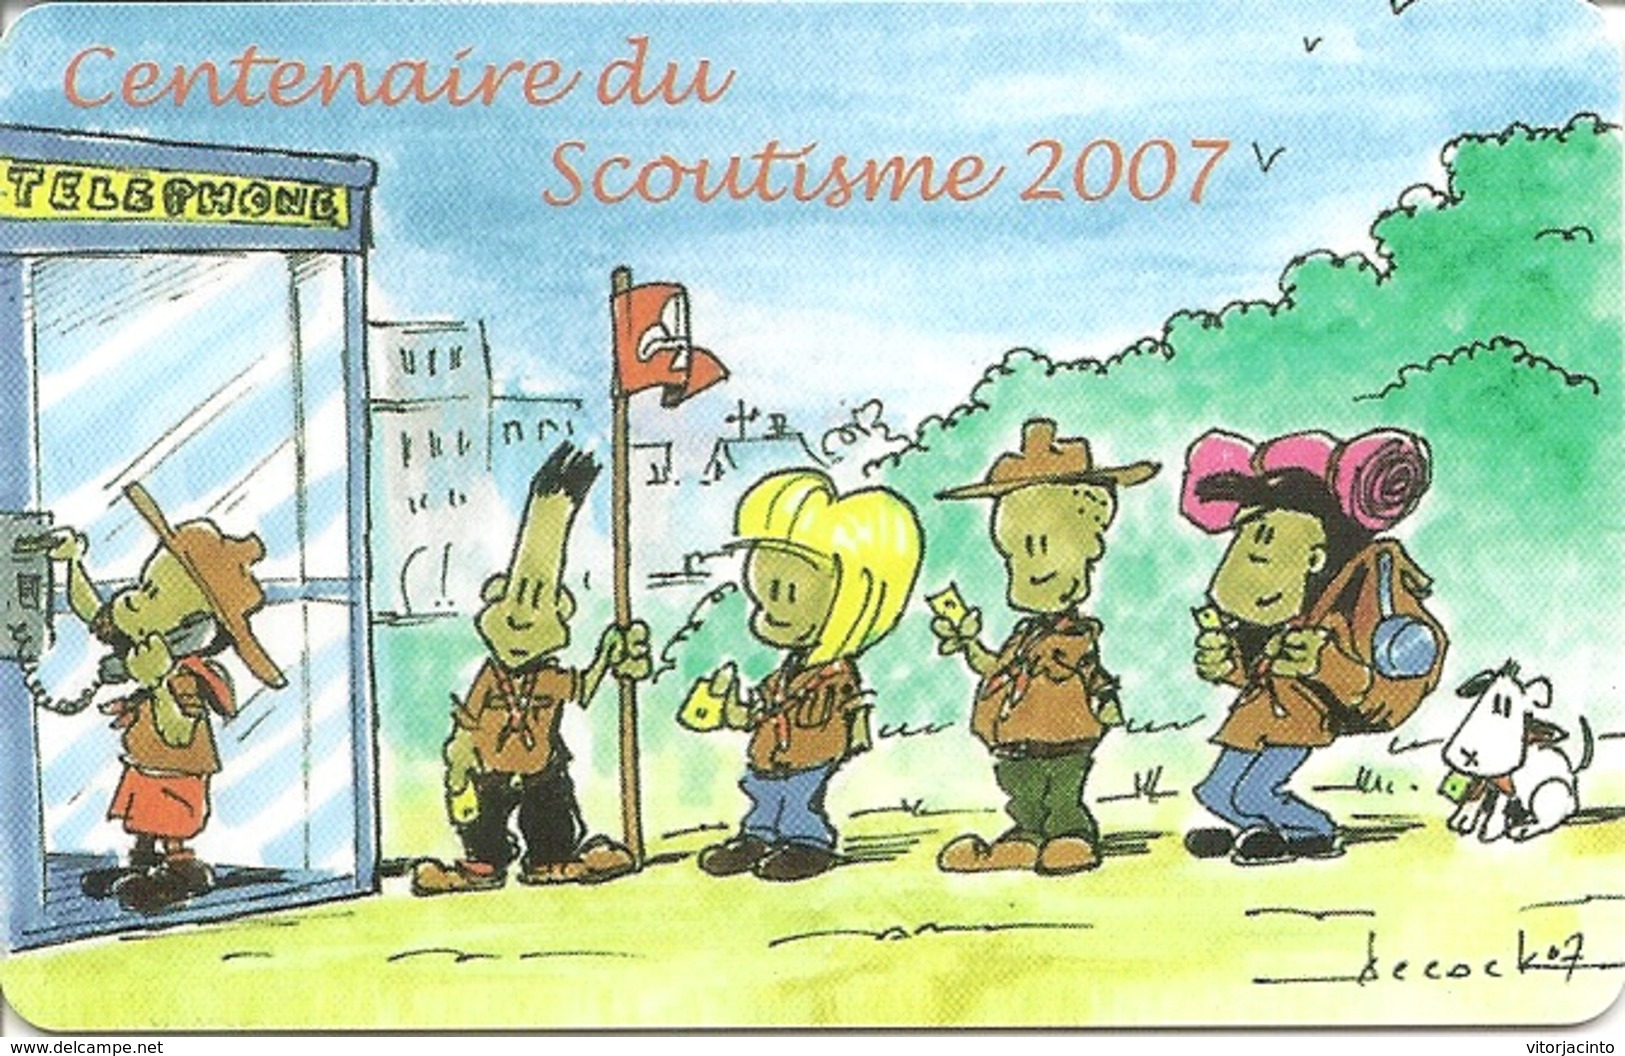 P&T Luxembourg - Telekaart - Centenaire Du Scoutisme 2007 - Luxembourg